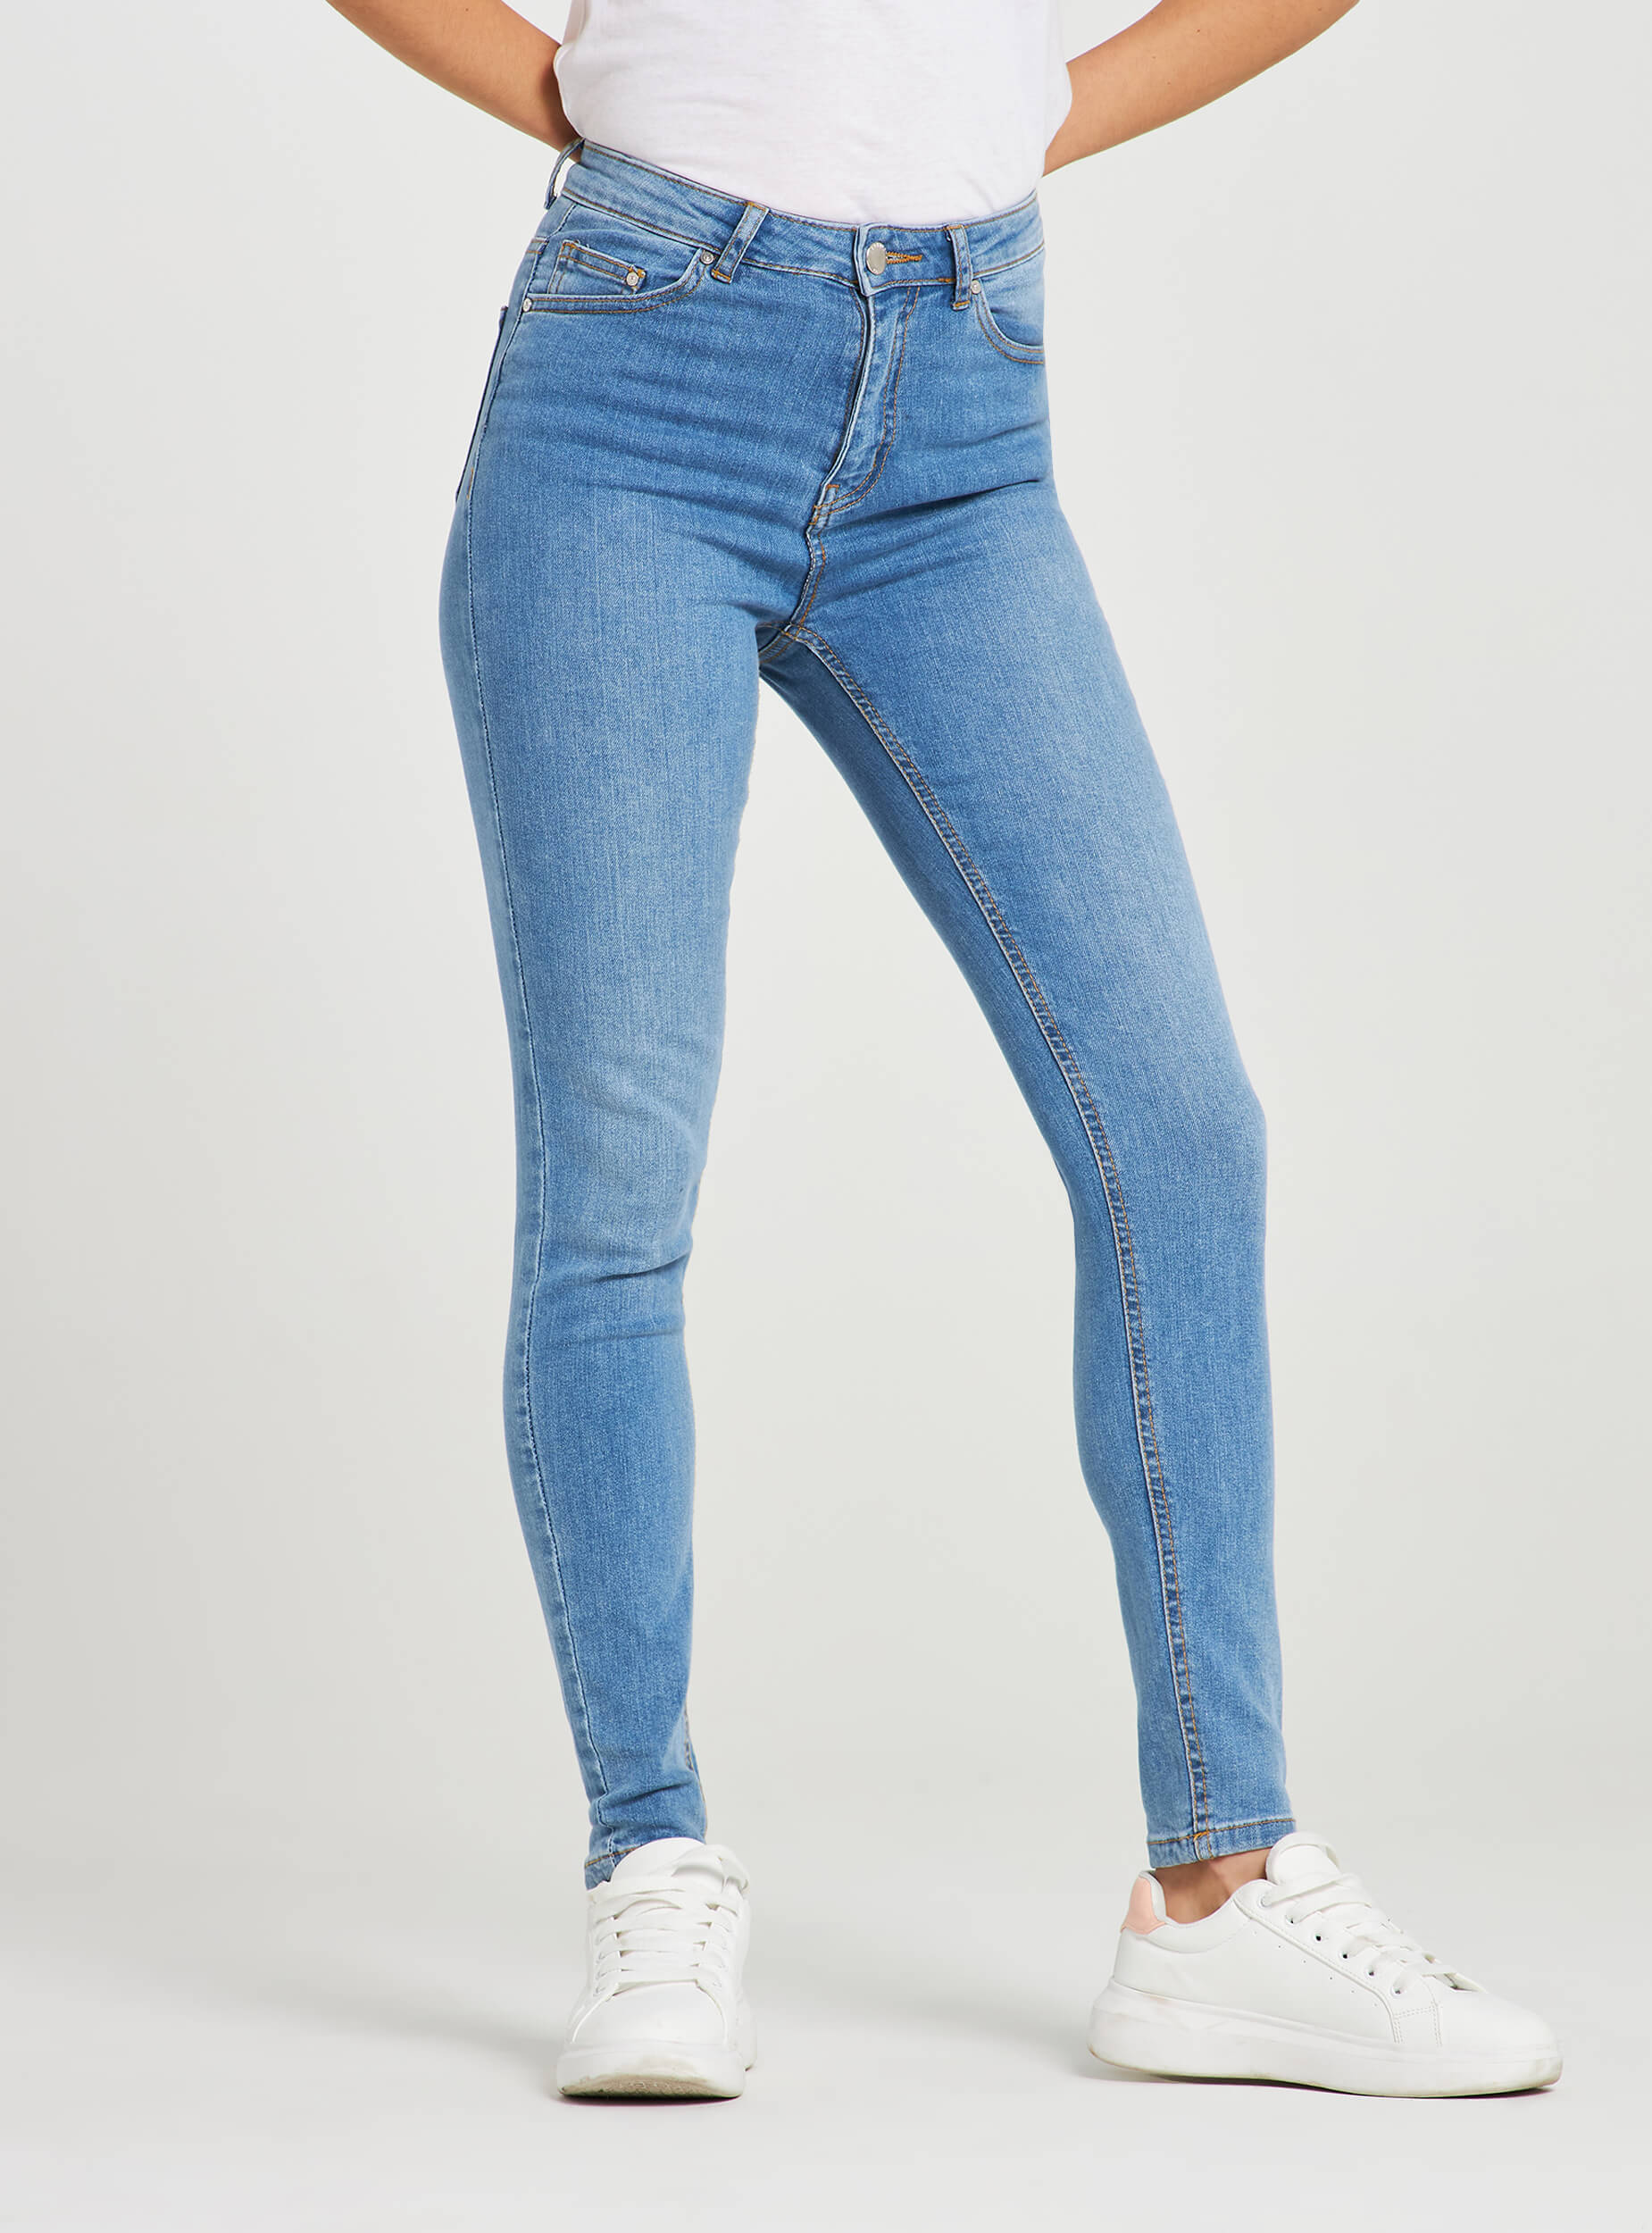 high waisted elastic jeans